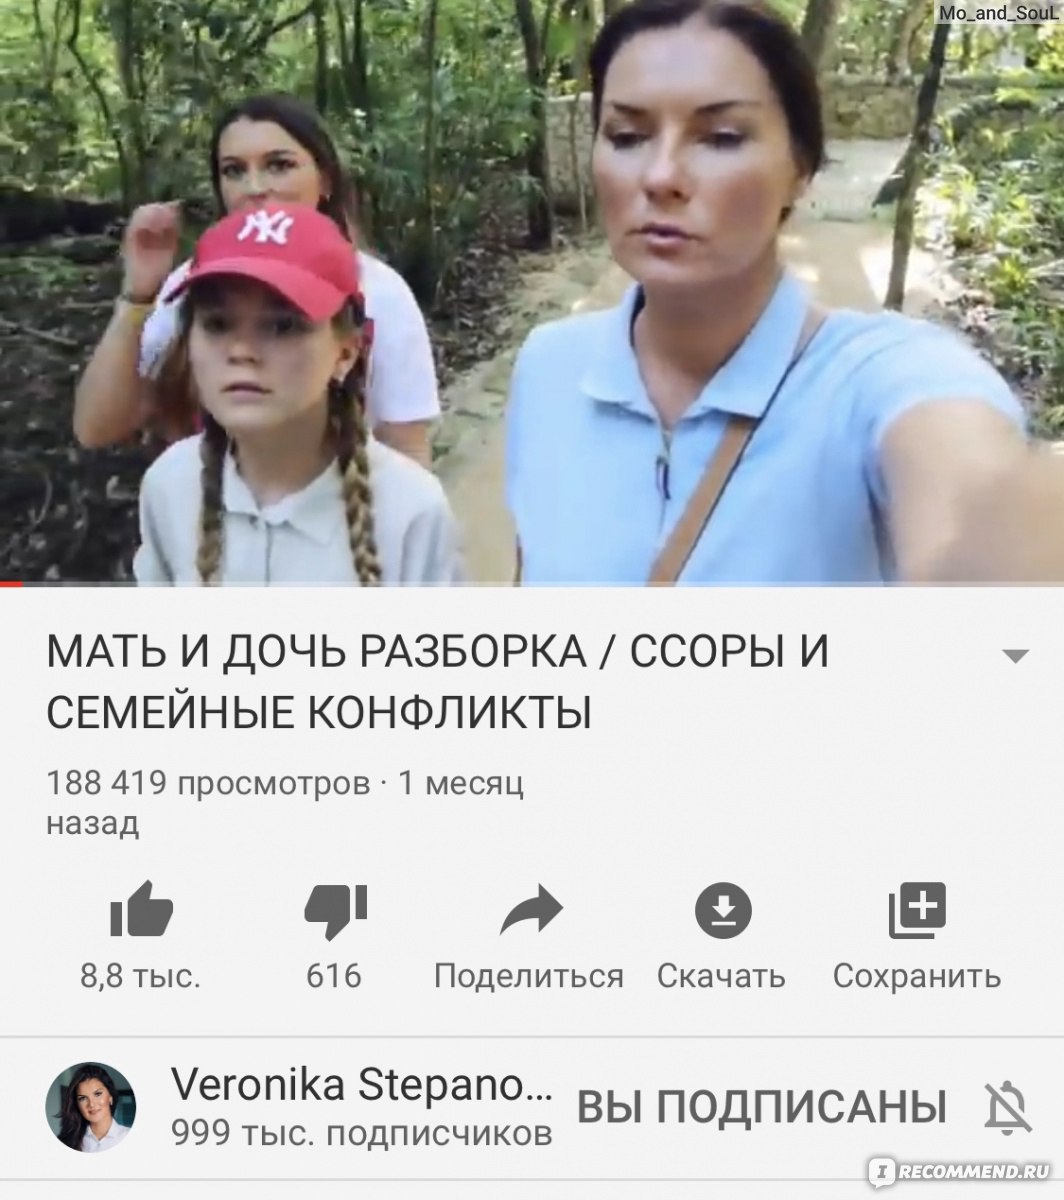 Вероника степанова с мужем и детьми фото